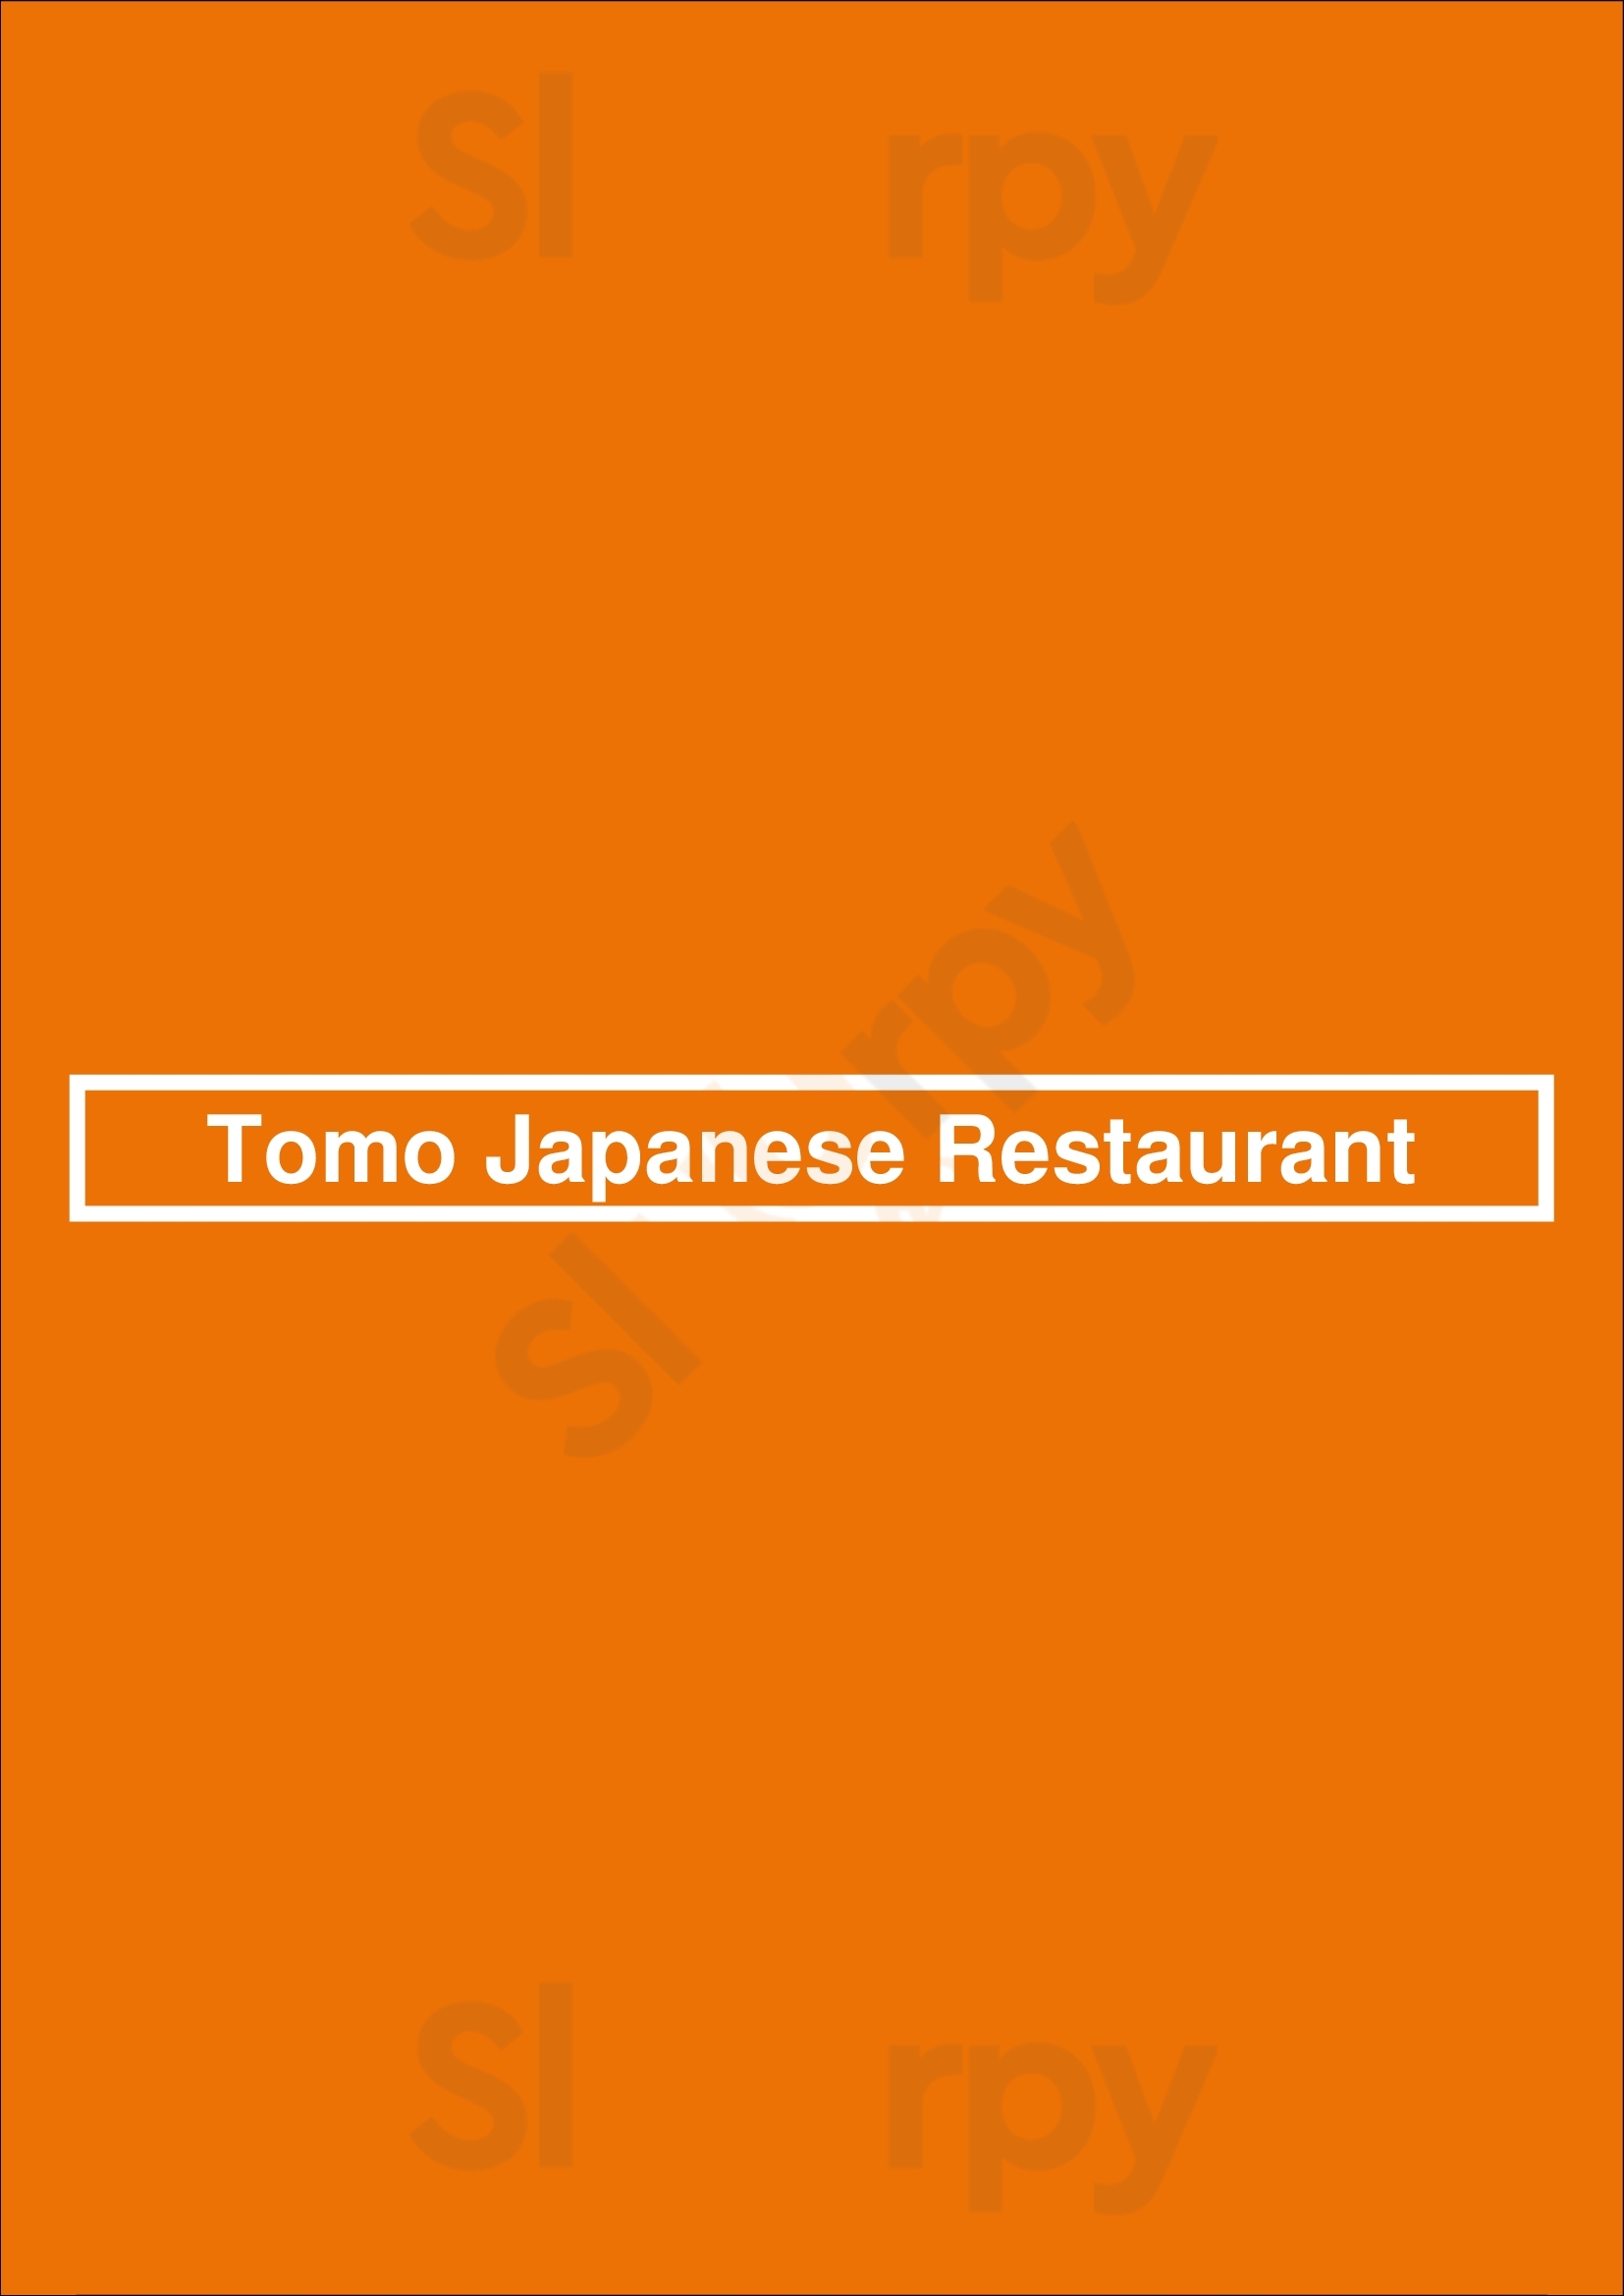 Tomo Japanese Restaurant Richmond Hill Menu - 1